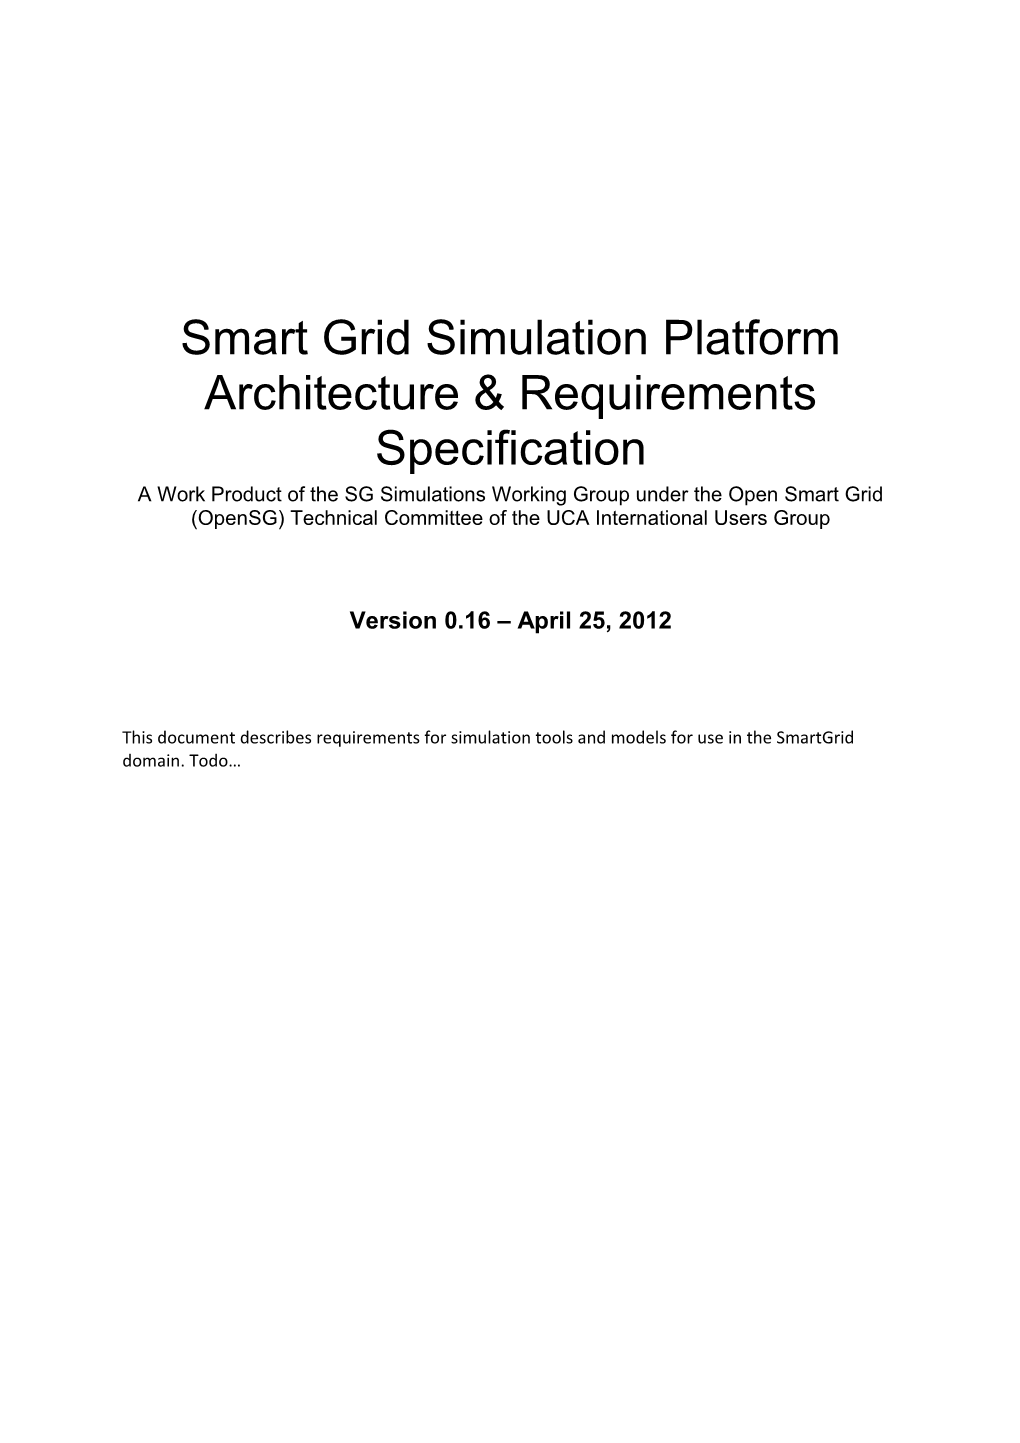 Smart Grid Simulation Platform Architecture & Requirements Specification s2